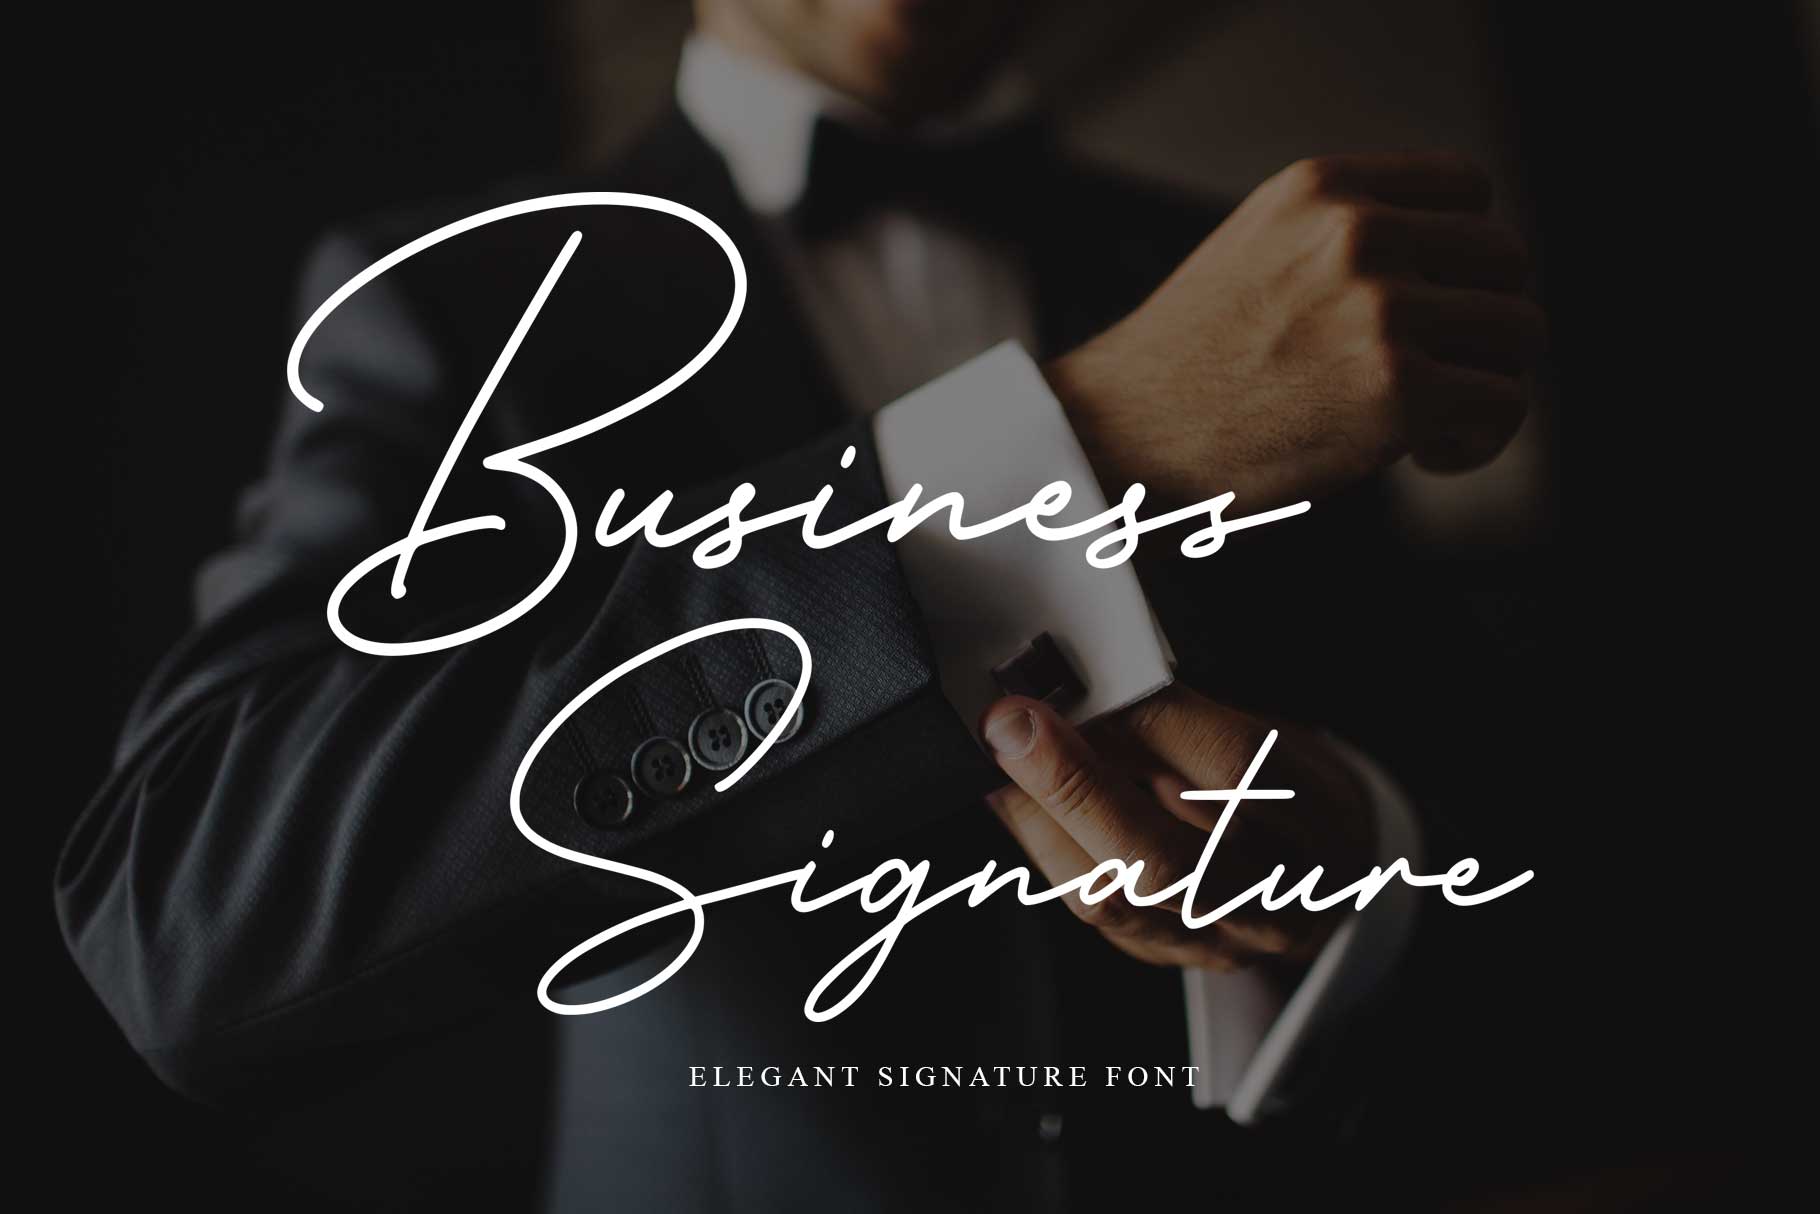 Business Signature D